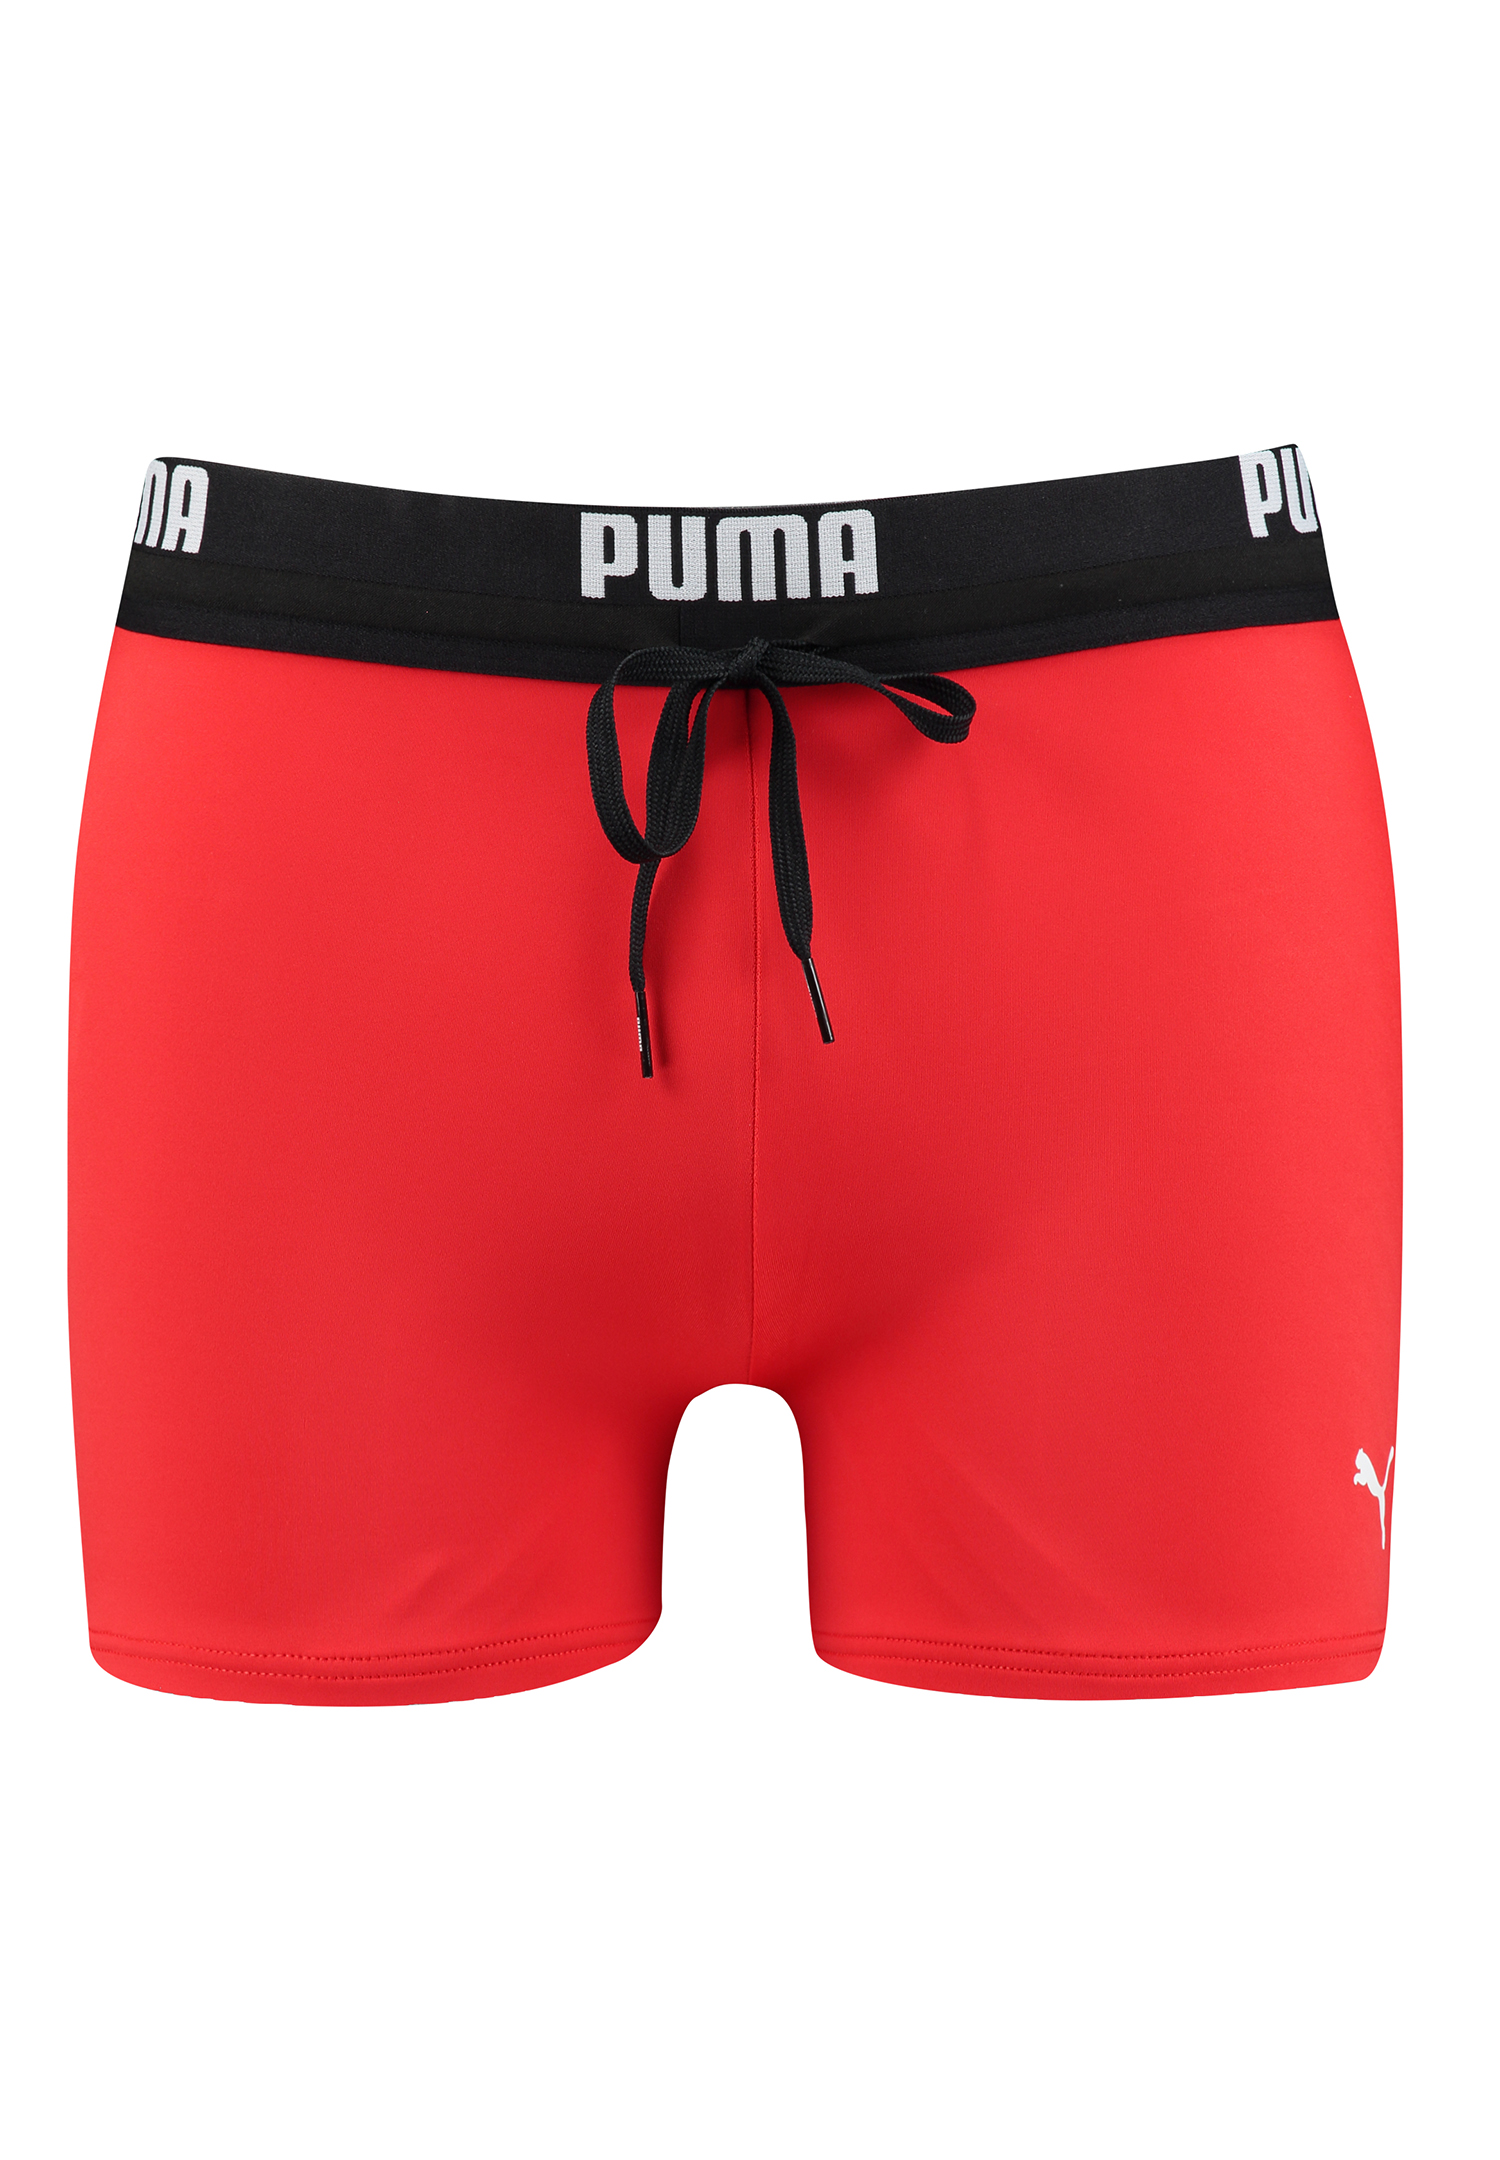 PUMA Herren Badehose Badeshorts Logo Swim Shorts Trunk 100000028 von Puma